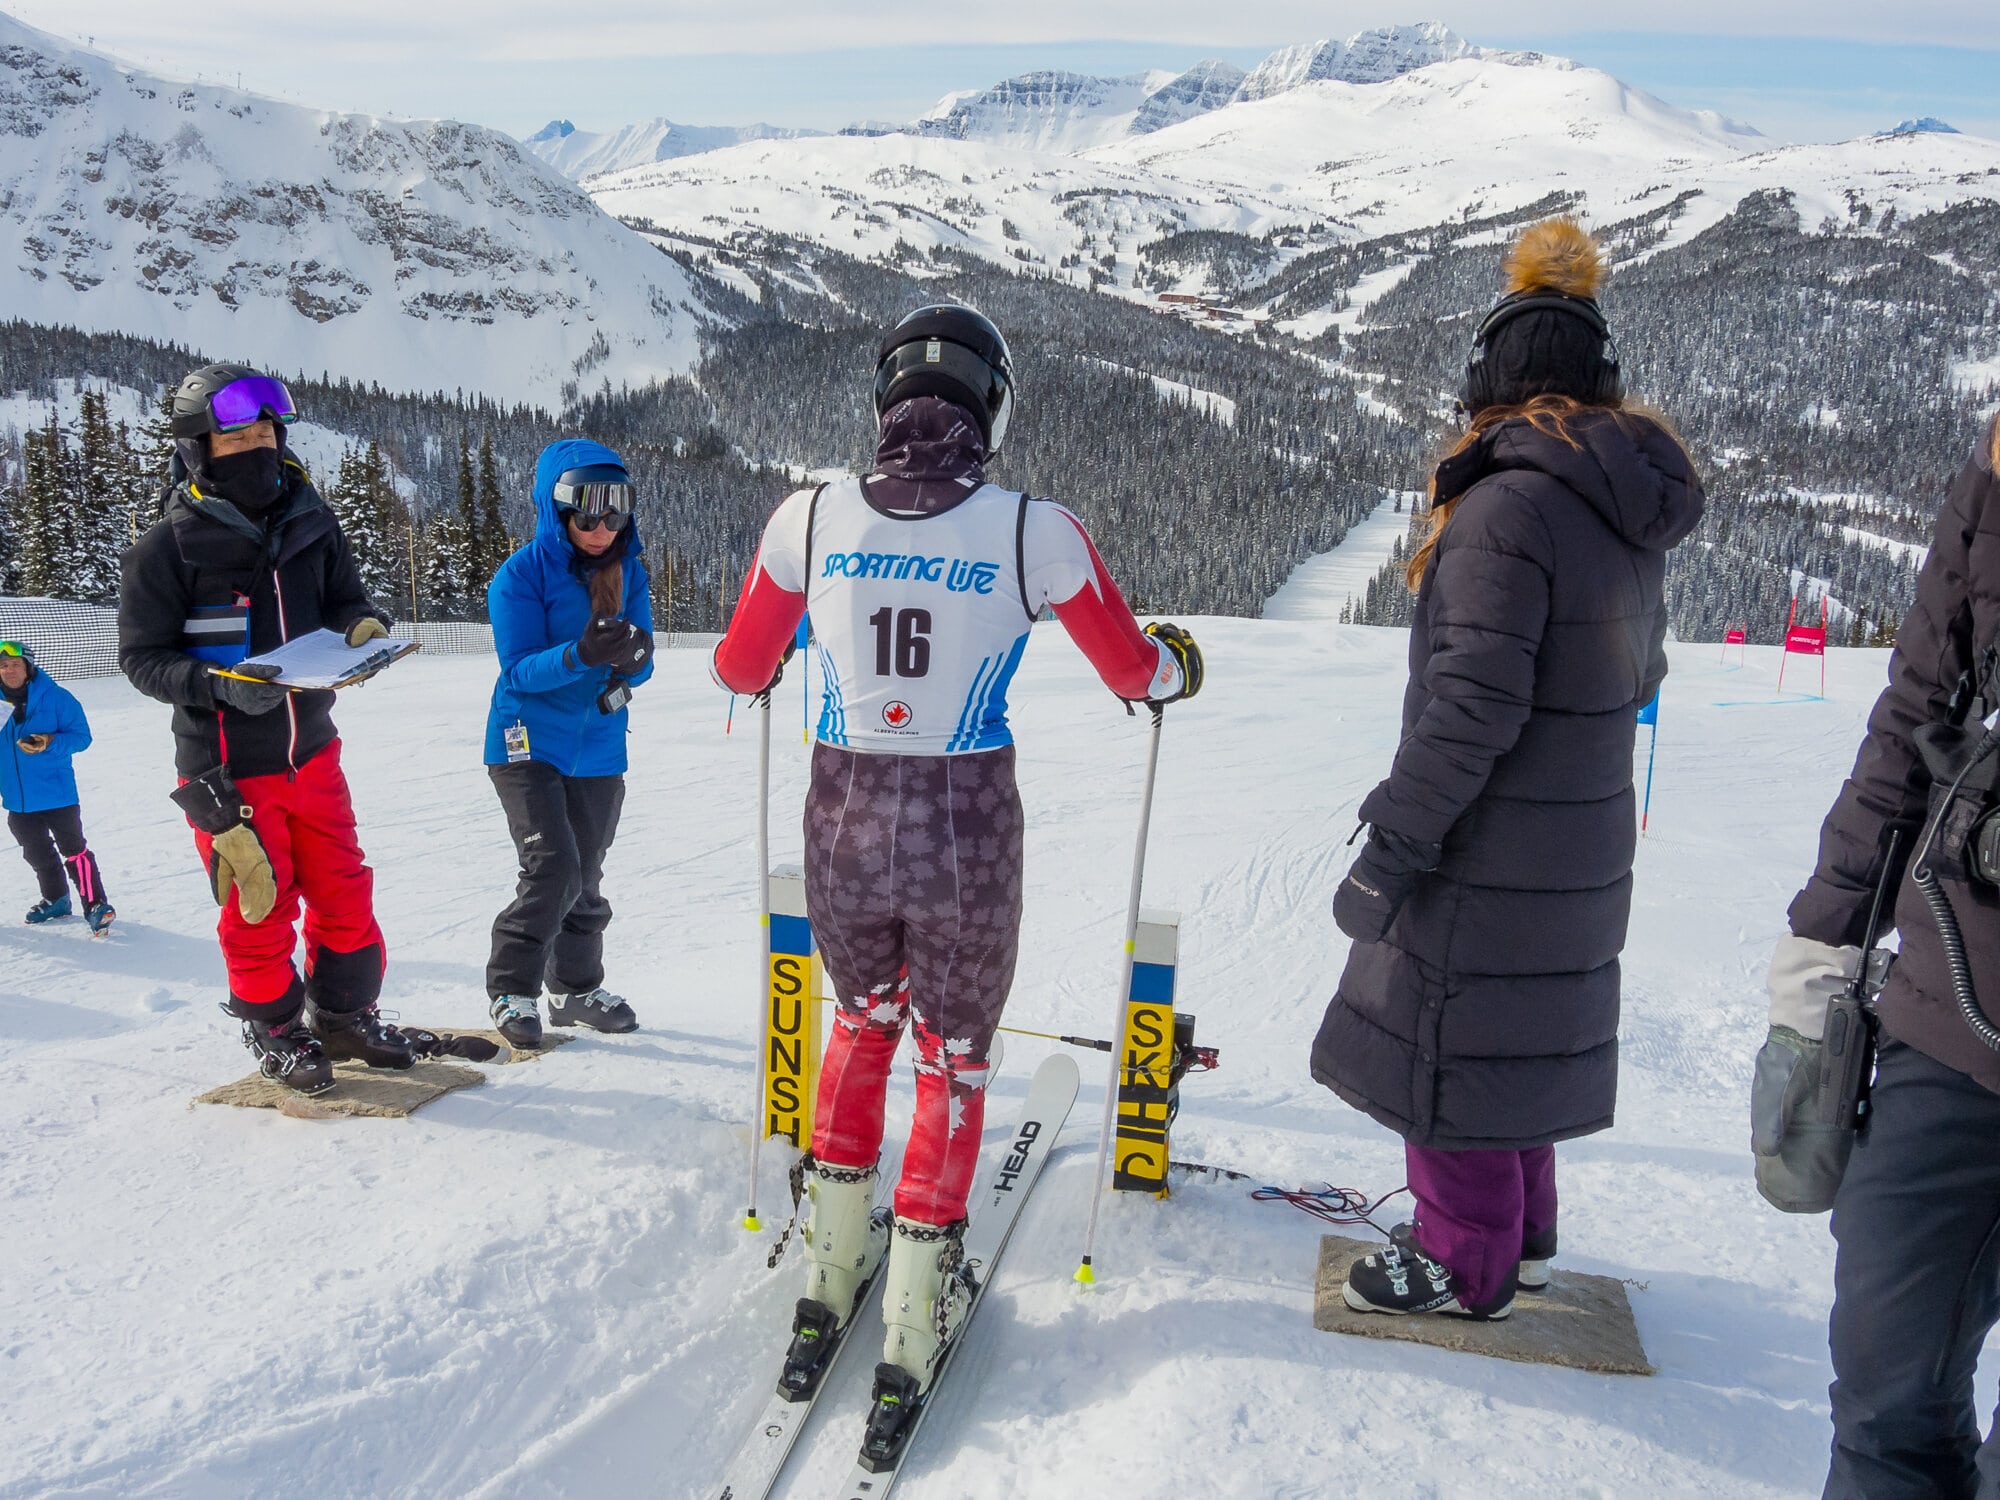 Alberta Alpine Sporting Life U16 Series – Sunshine February 25th-27th 2022: A Photo Essay